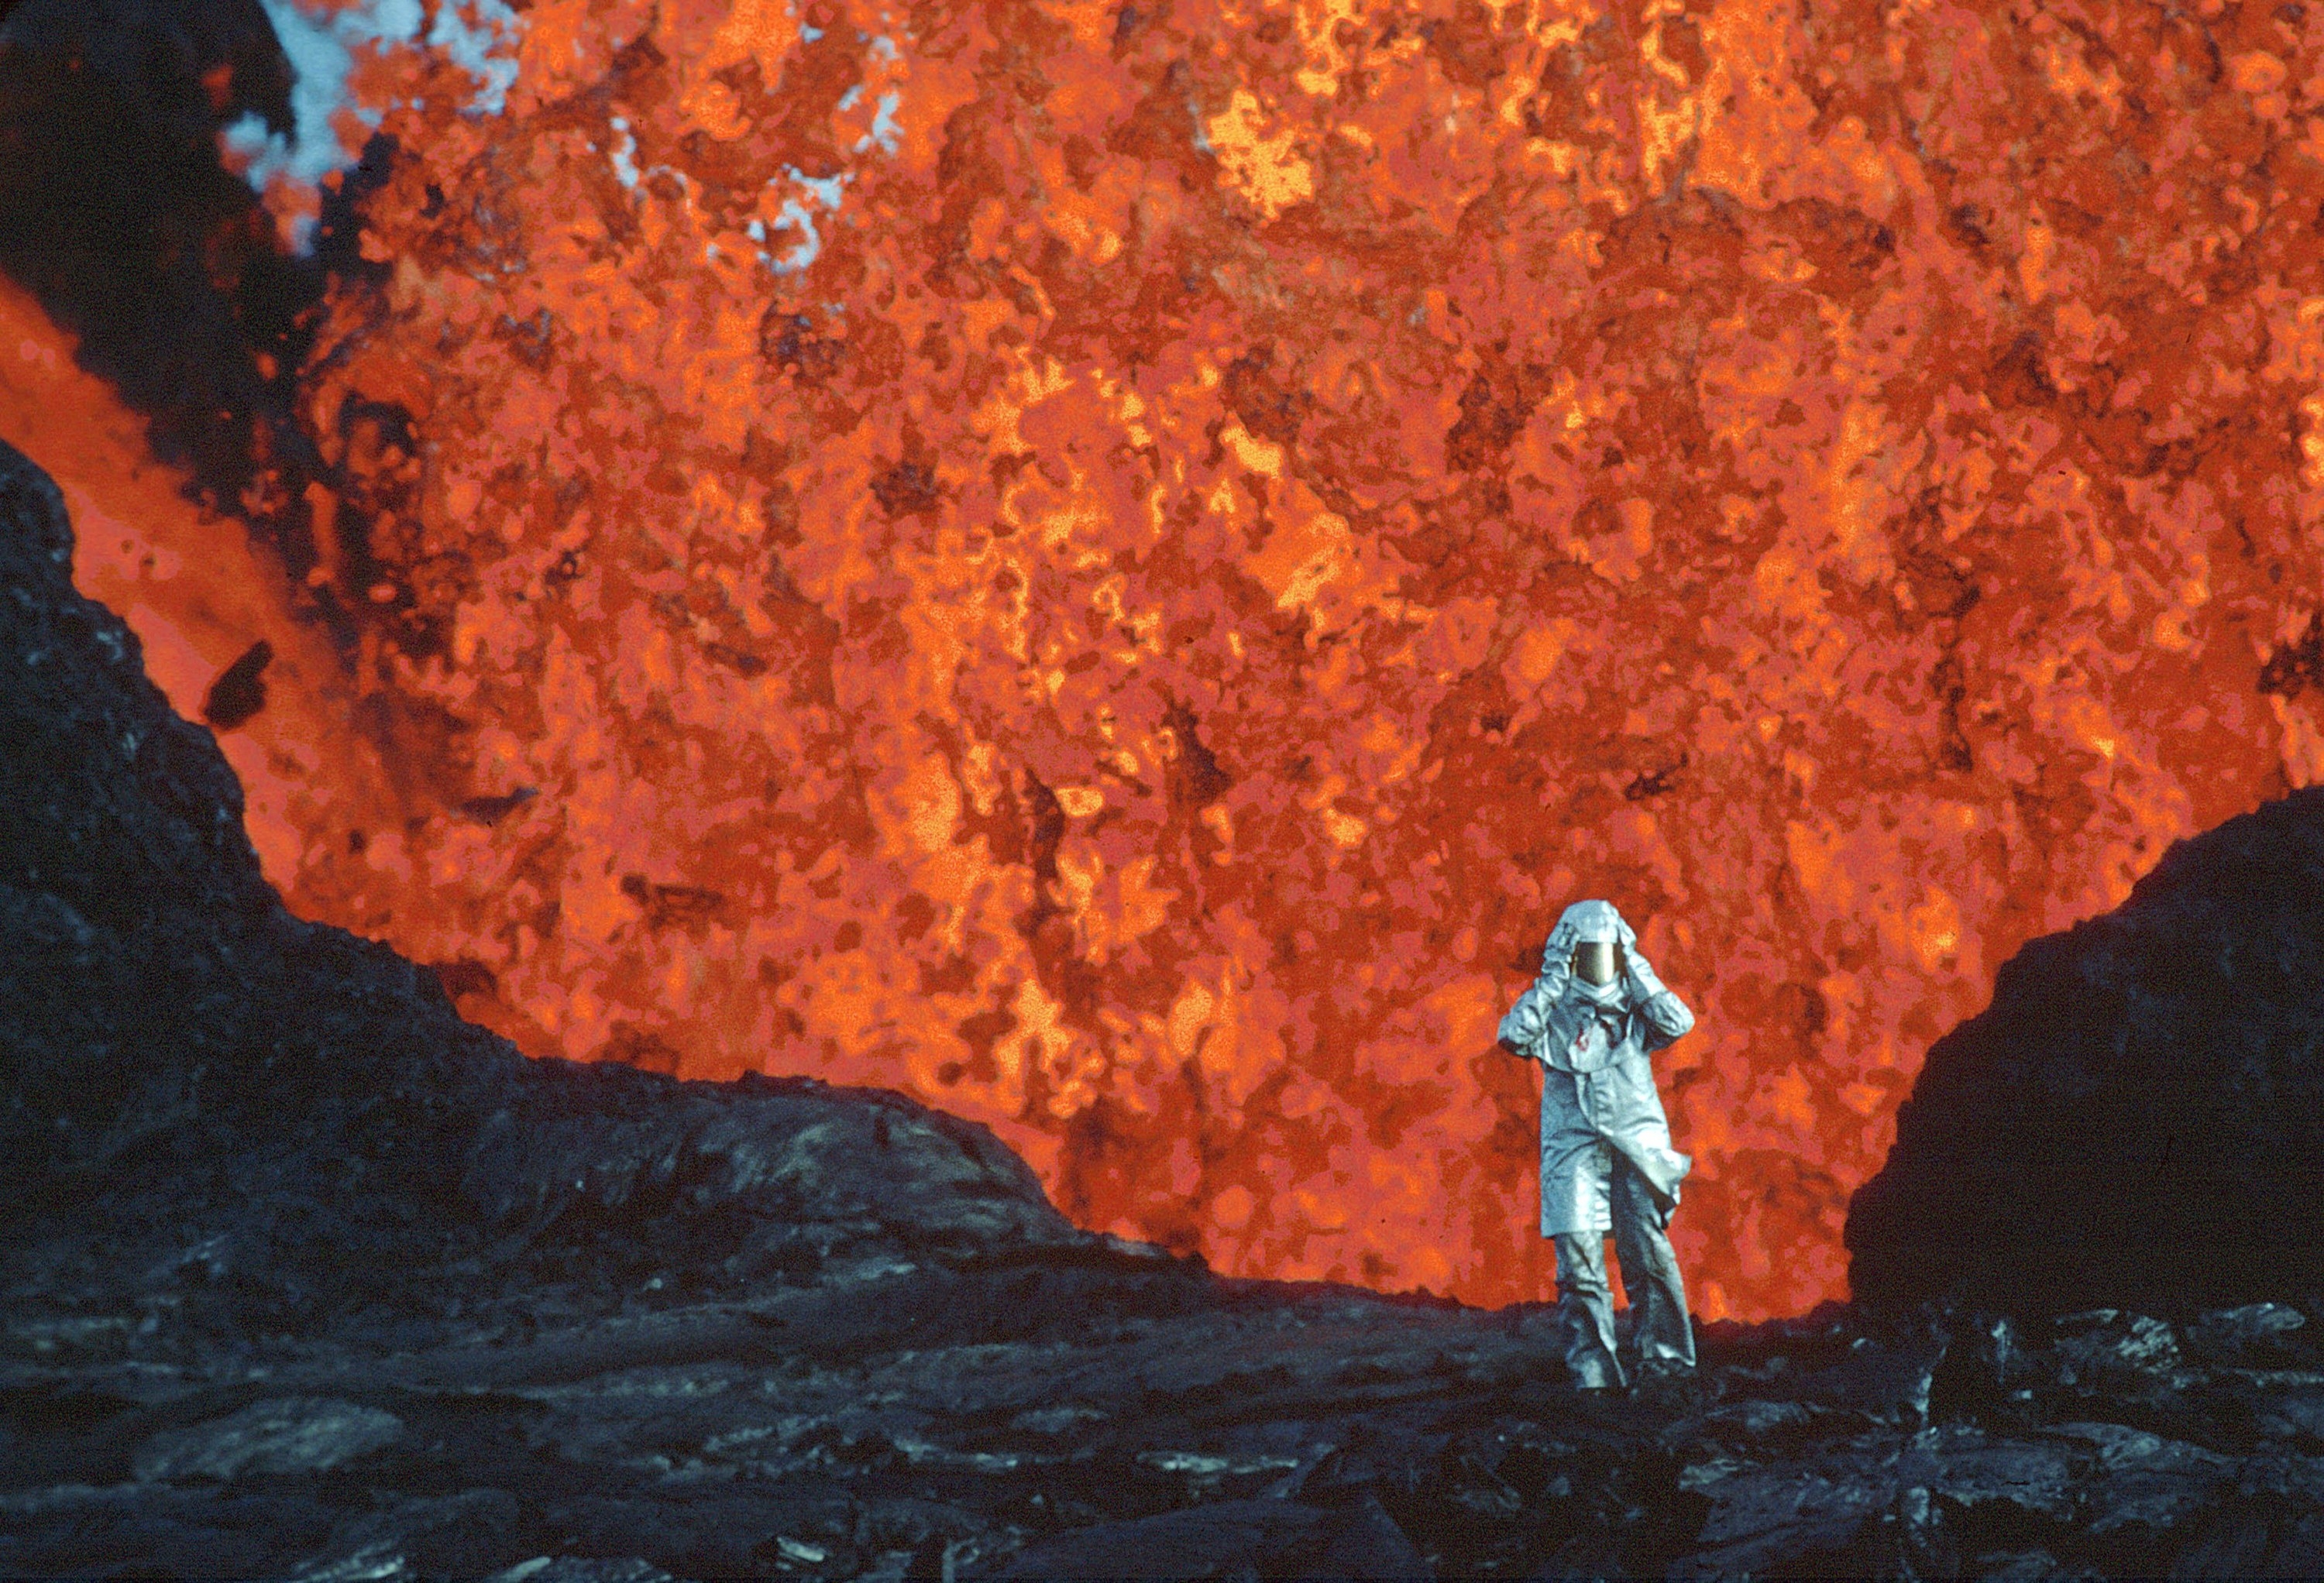 Katia Krafft stands near a volcano